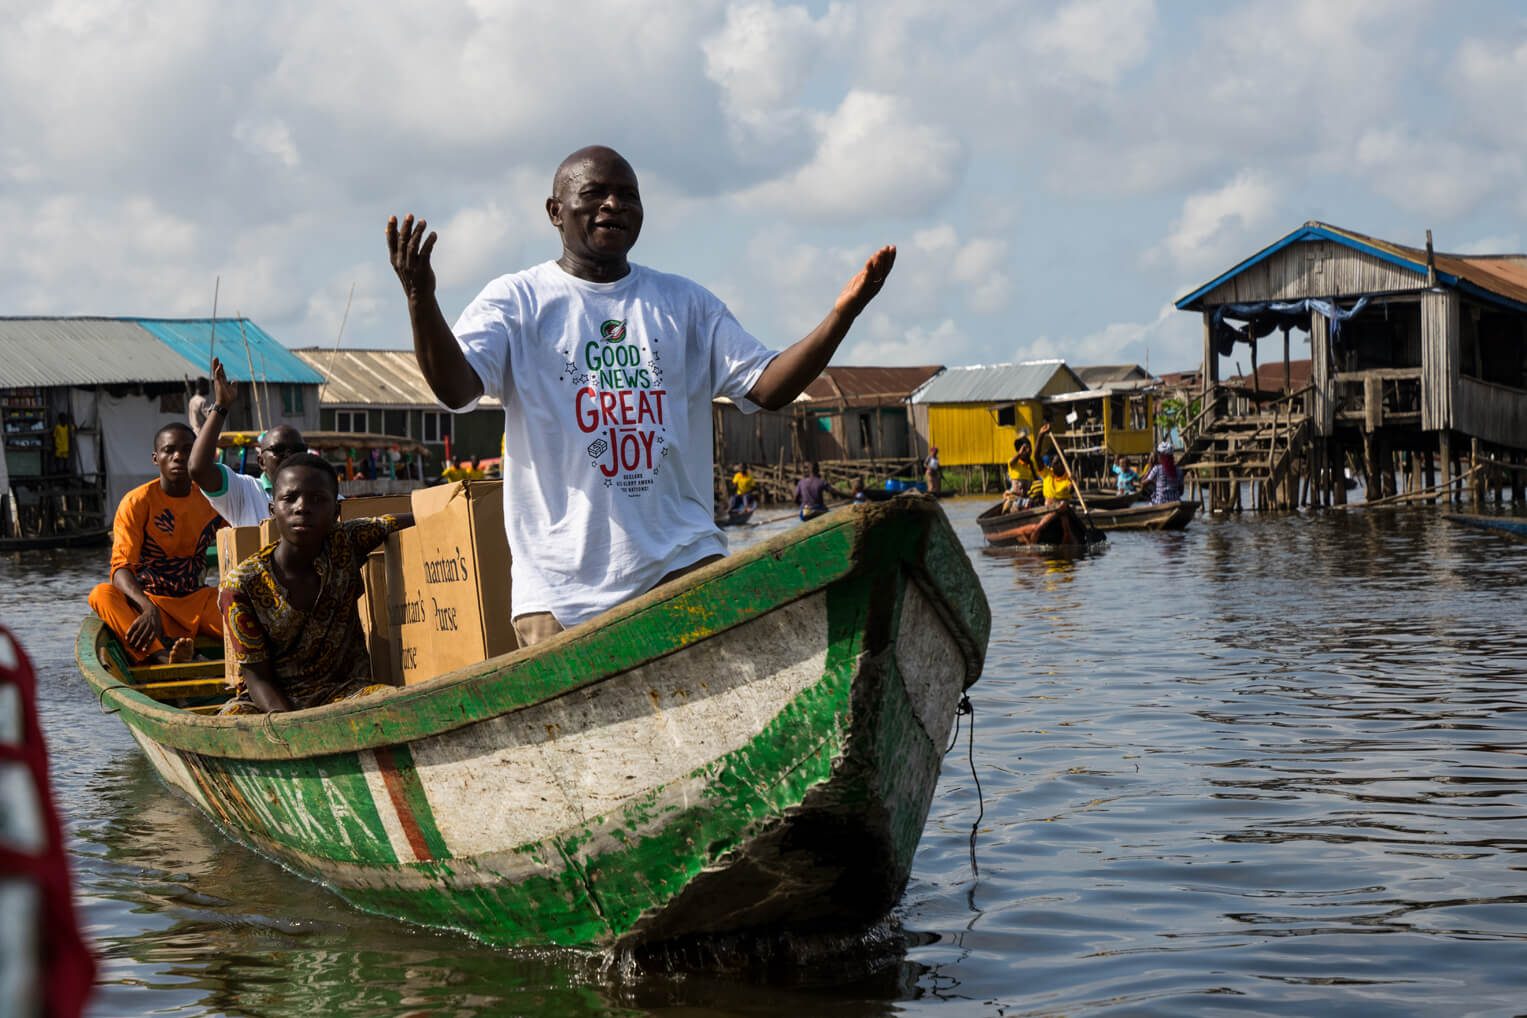 Operation Christmas Child volunteers in Benin transport shoebox gifts across Nokoue Lake west of the capital Cotonou.